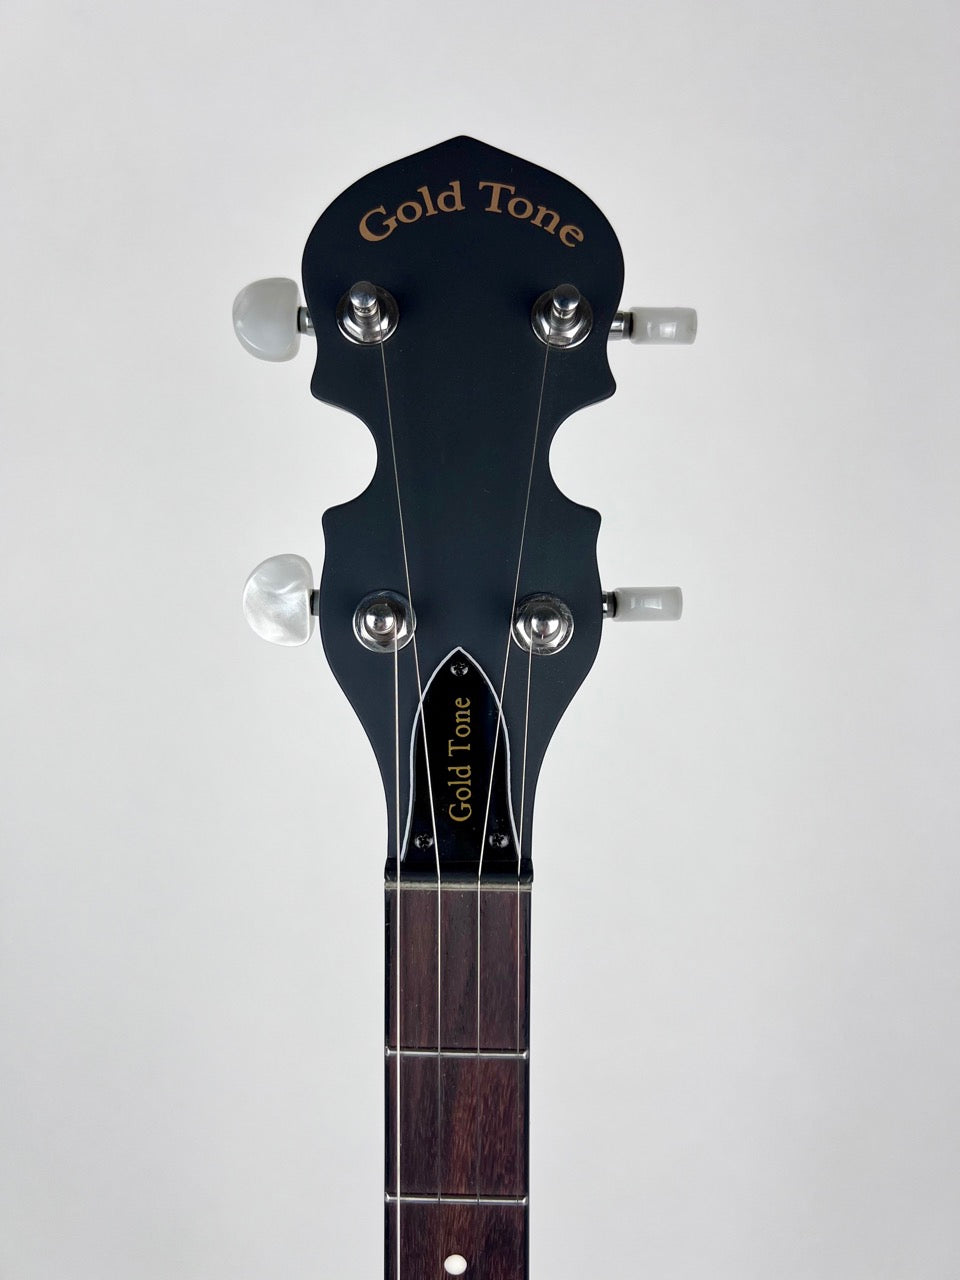 Gold Tone CC-50